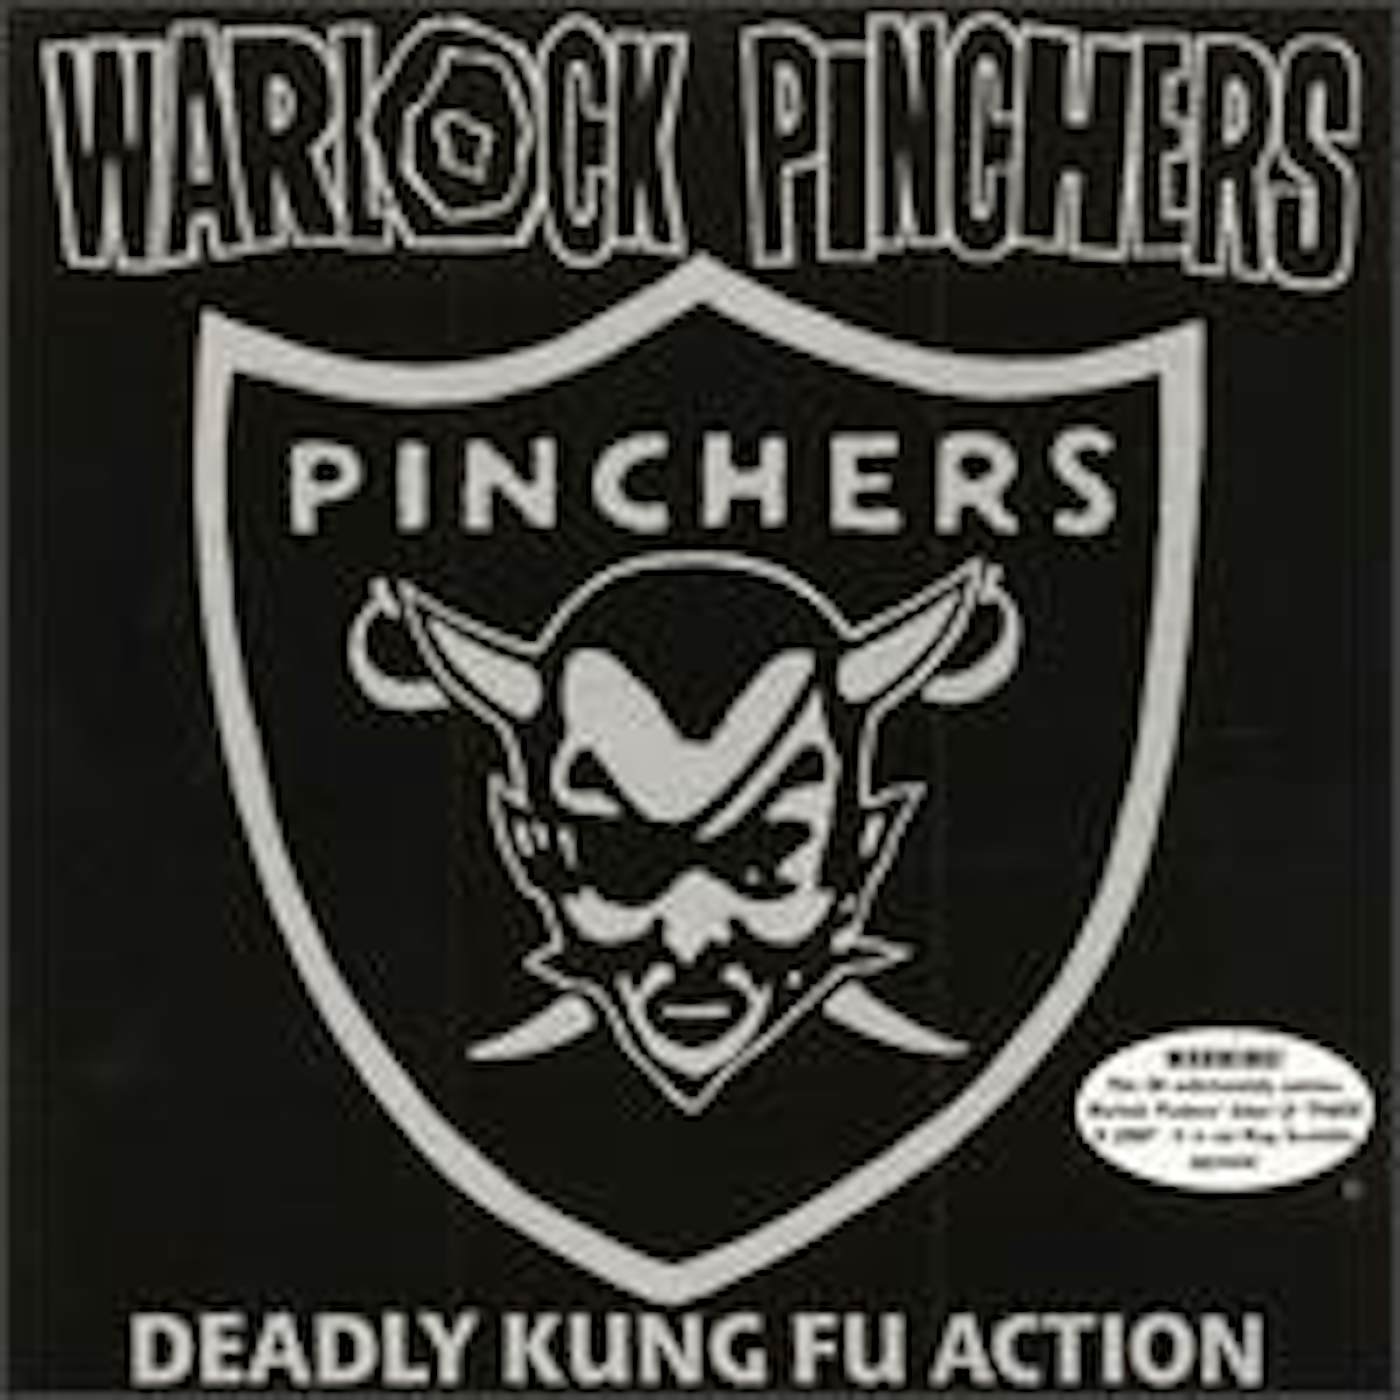 Warlock Pinchers DEADLY KUNG Vinyl Record